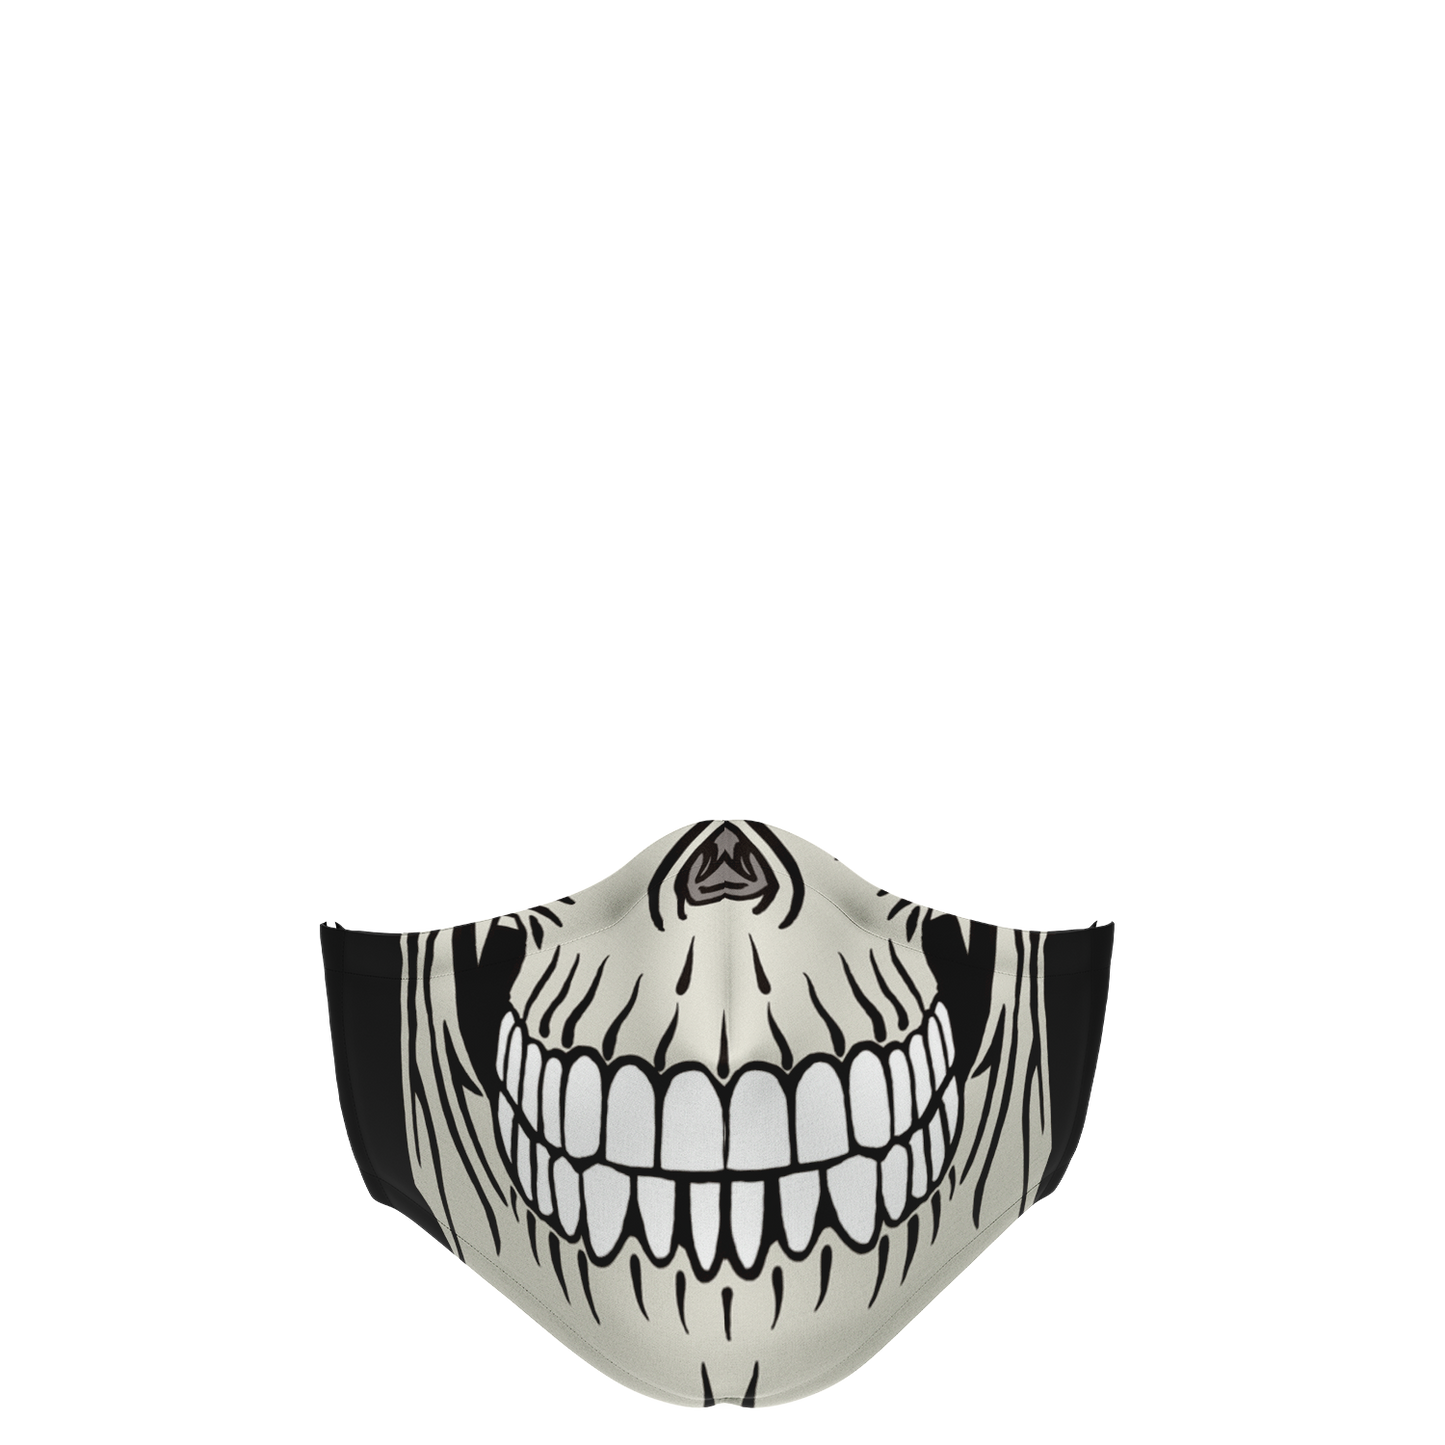 GU 'Skeleton' Fashion Mask